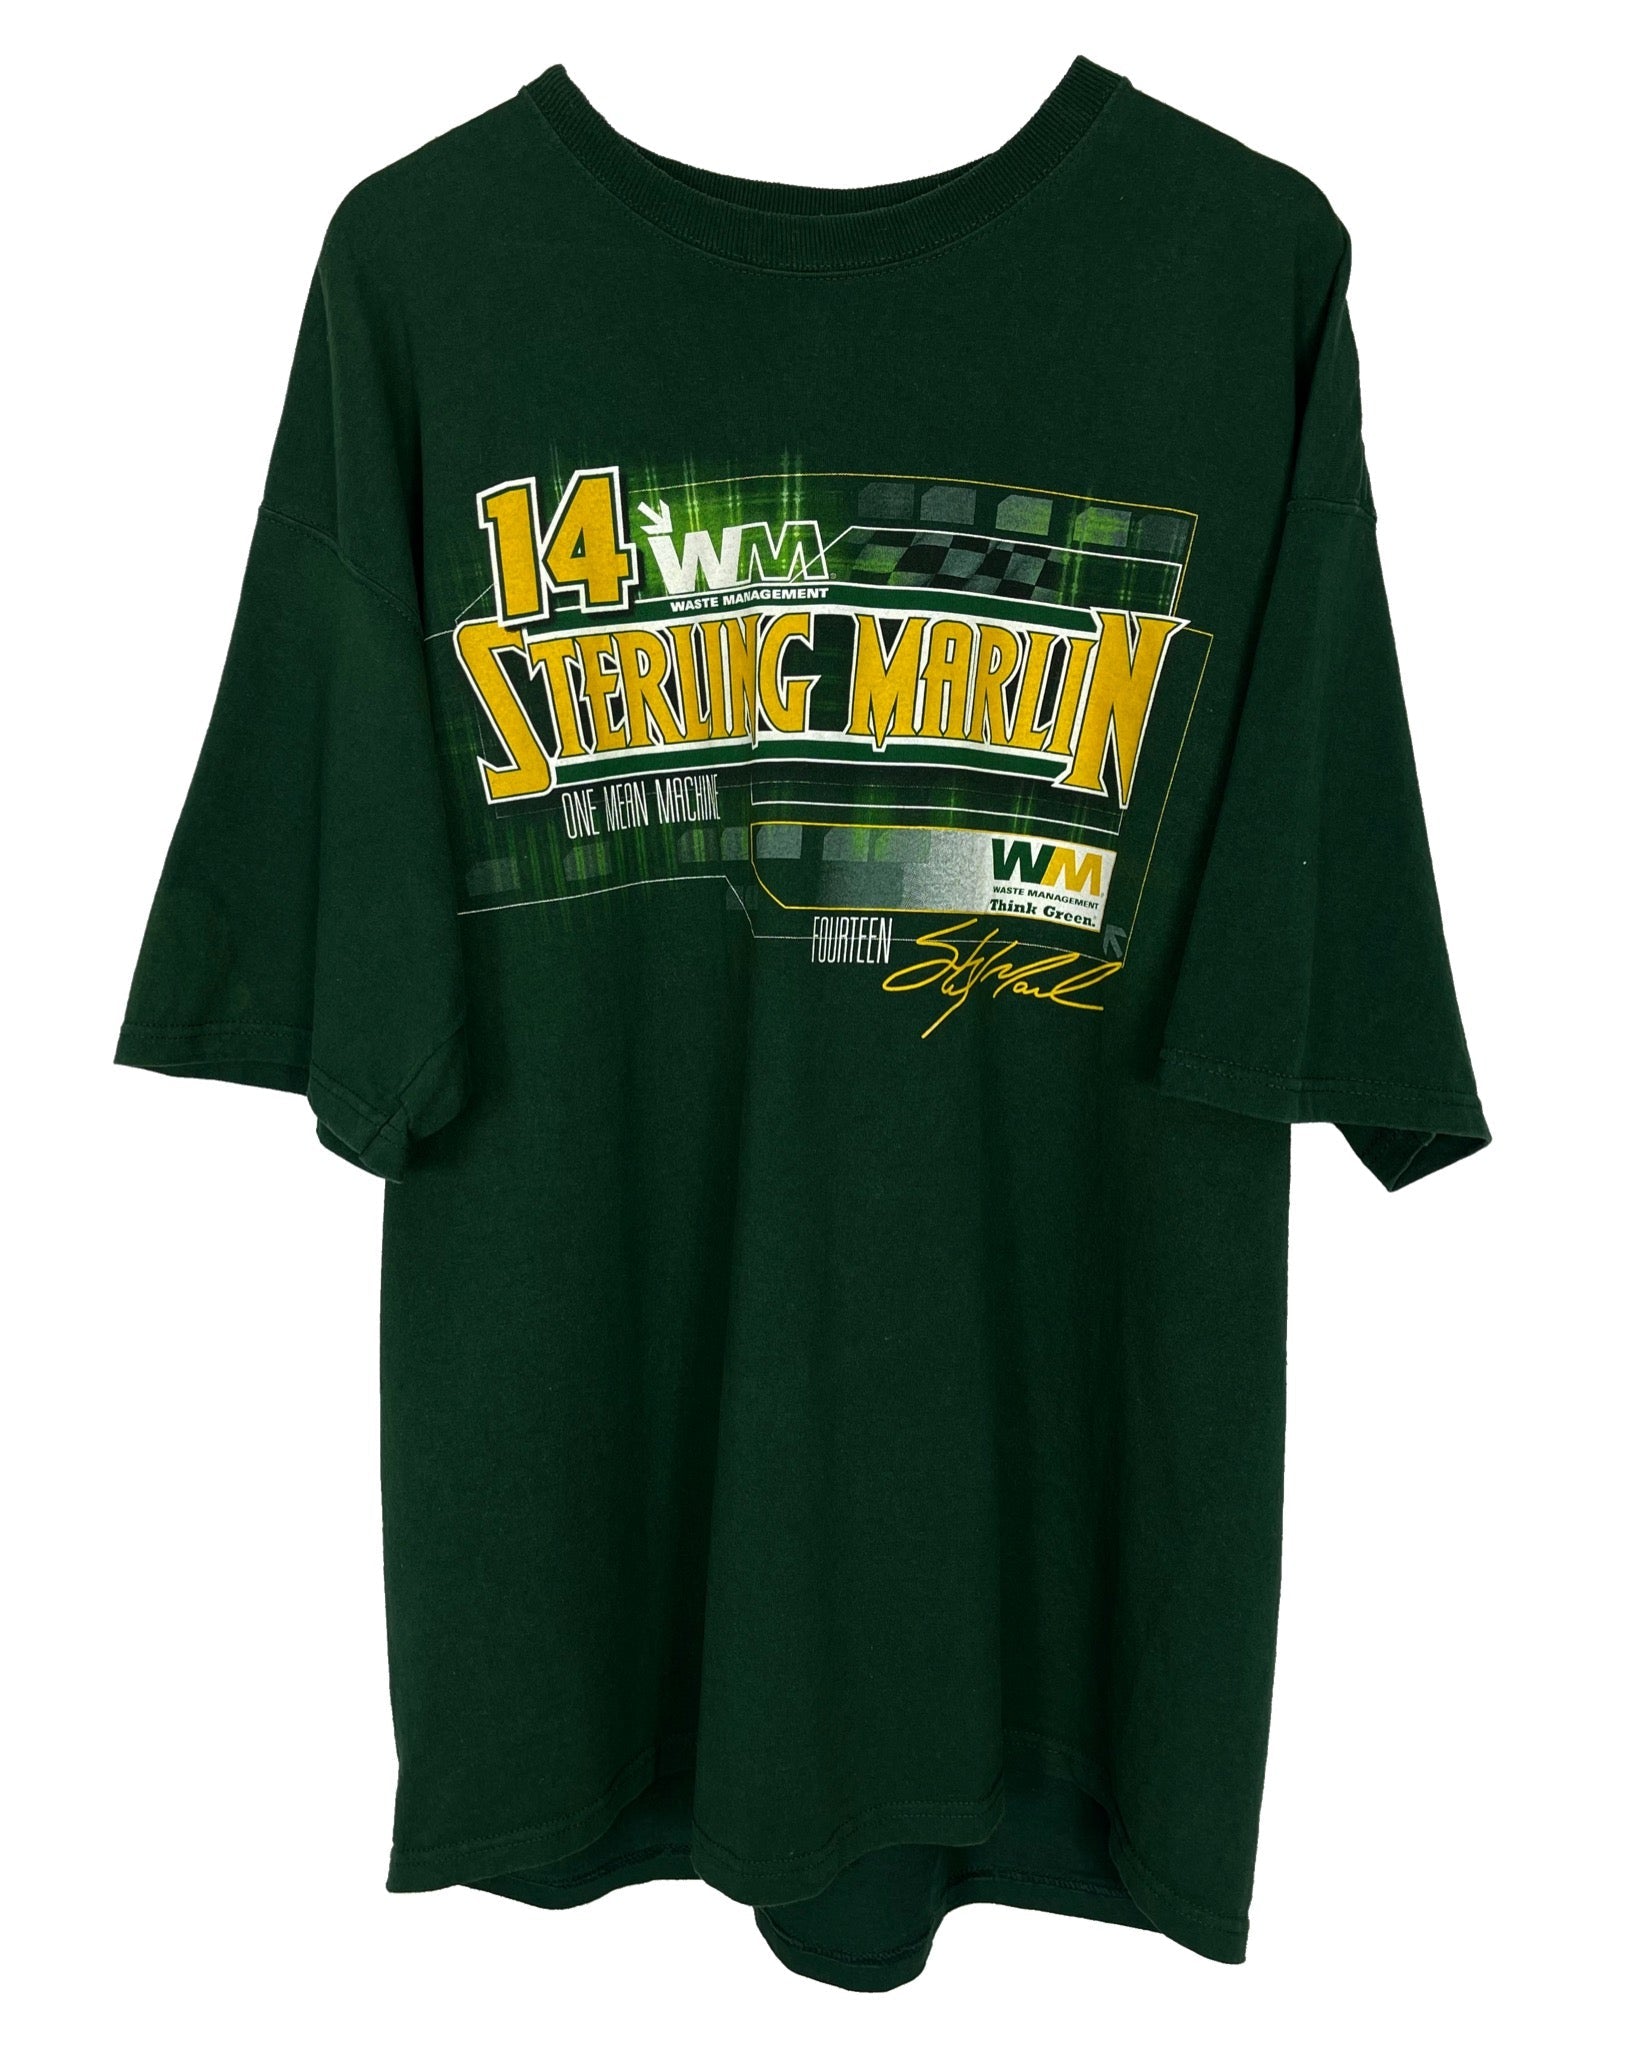  T-shirt Vintage T-shirt - NASCAR - Sterling Marlin - XXL - PLOMOSTORE